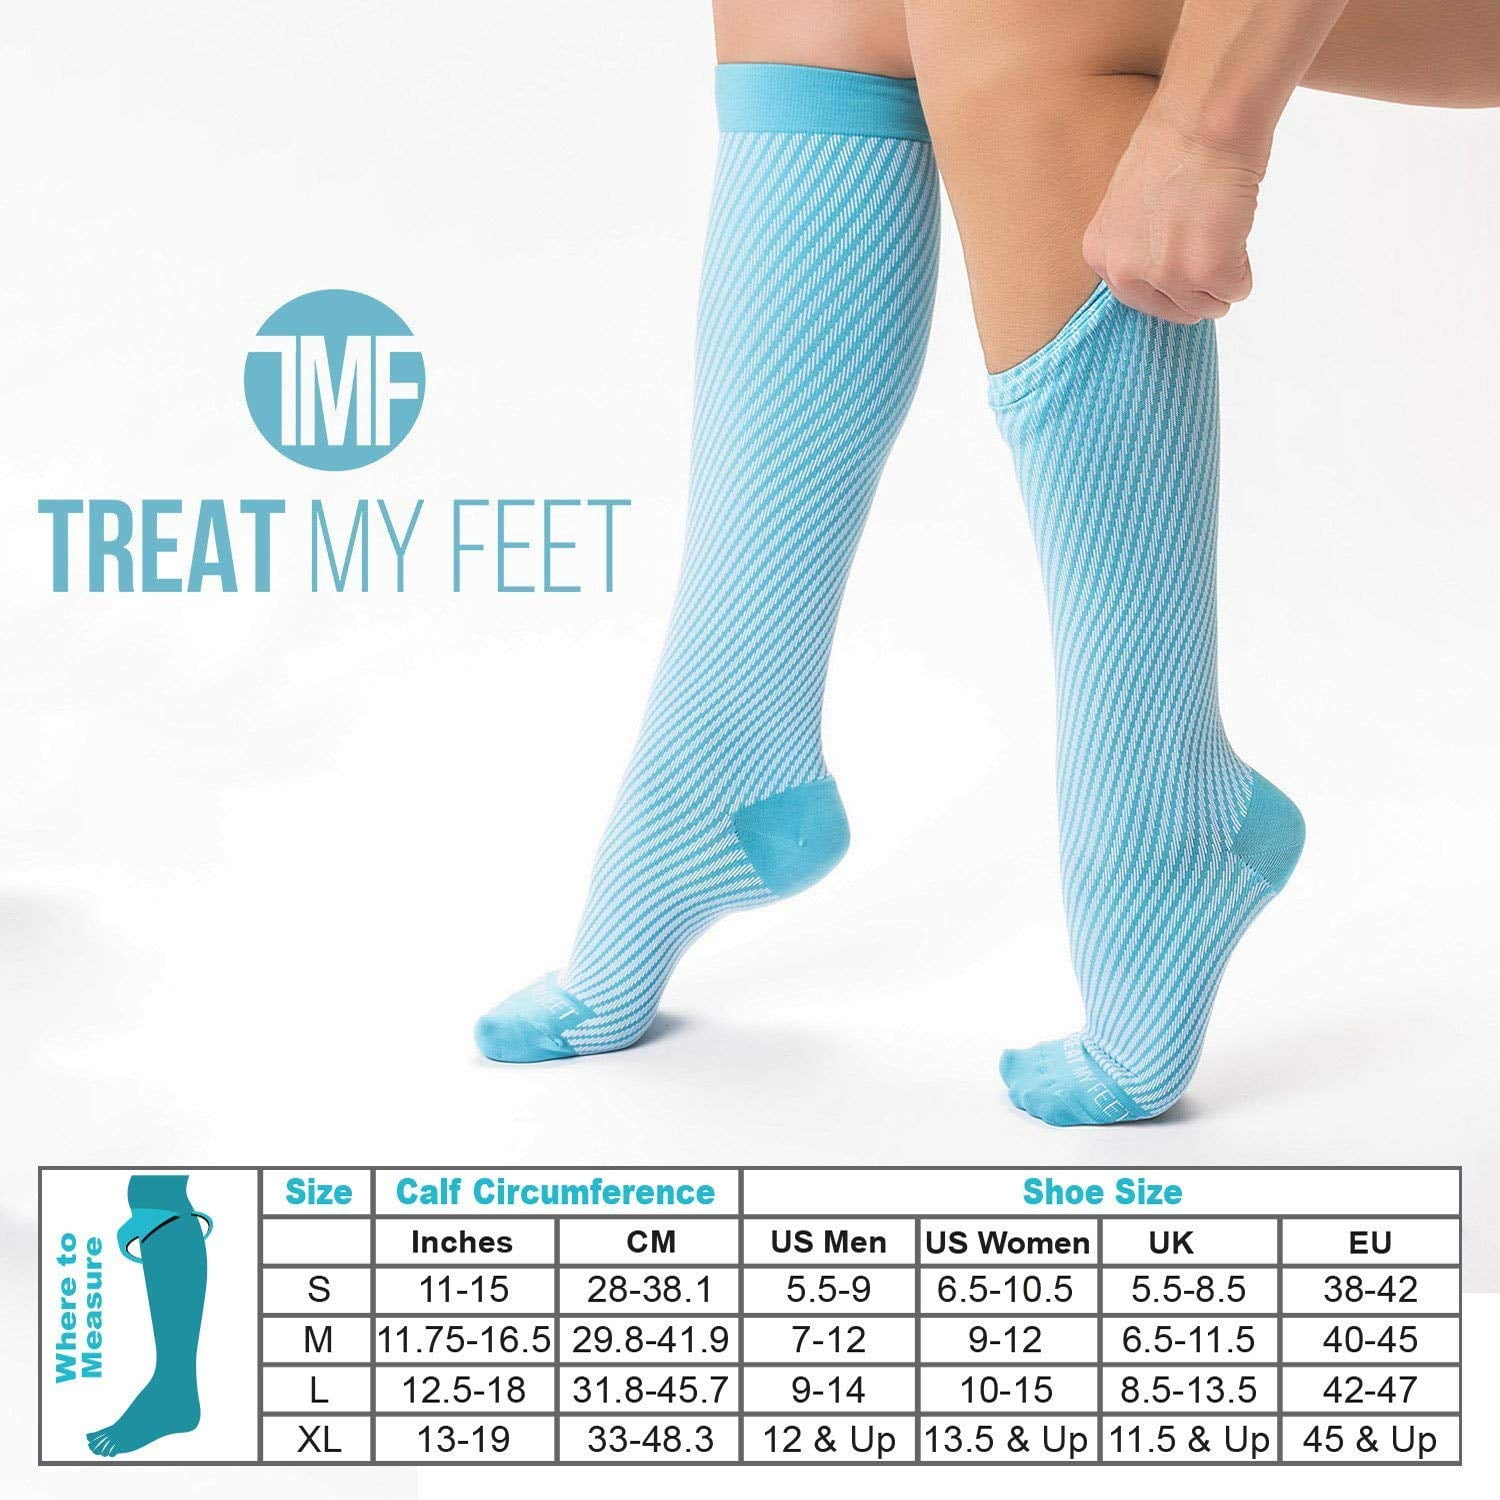 Dress Sock Length: Mid-Calf or Over the Calf? - Boardroom Socks